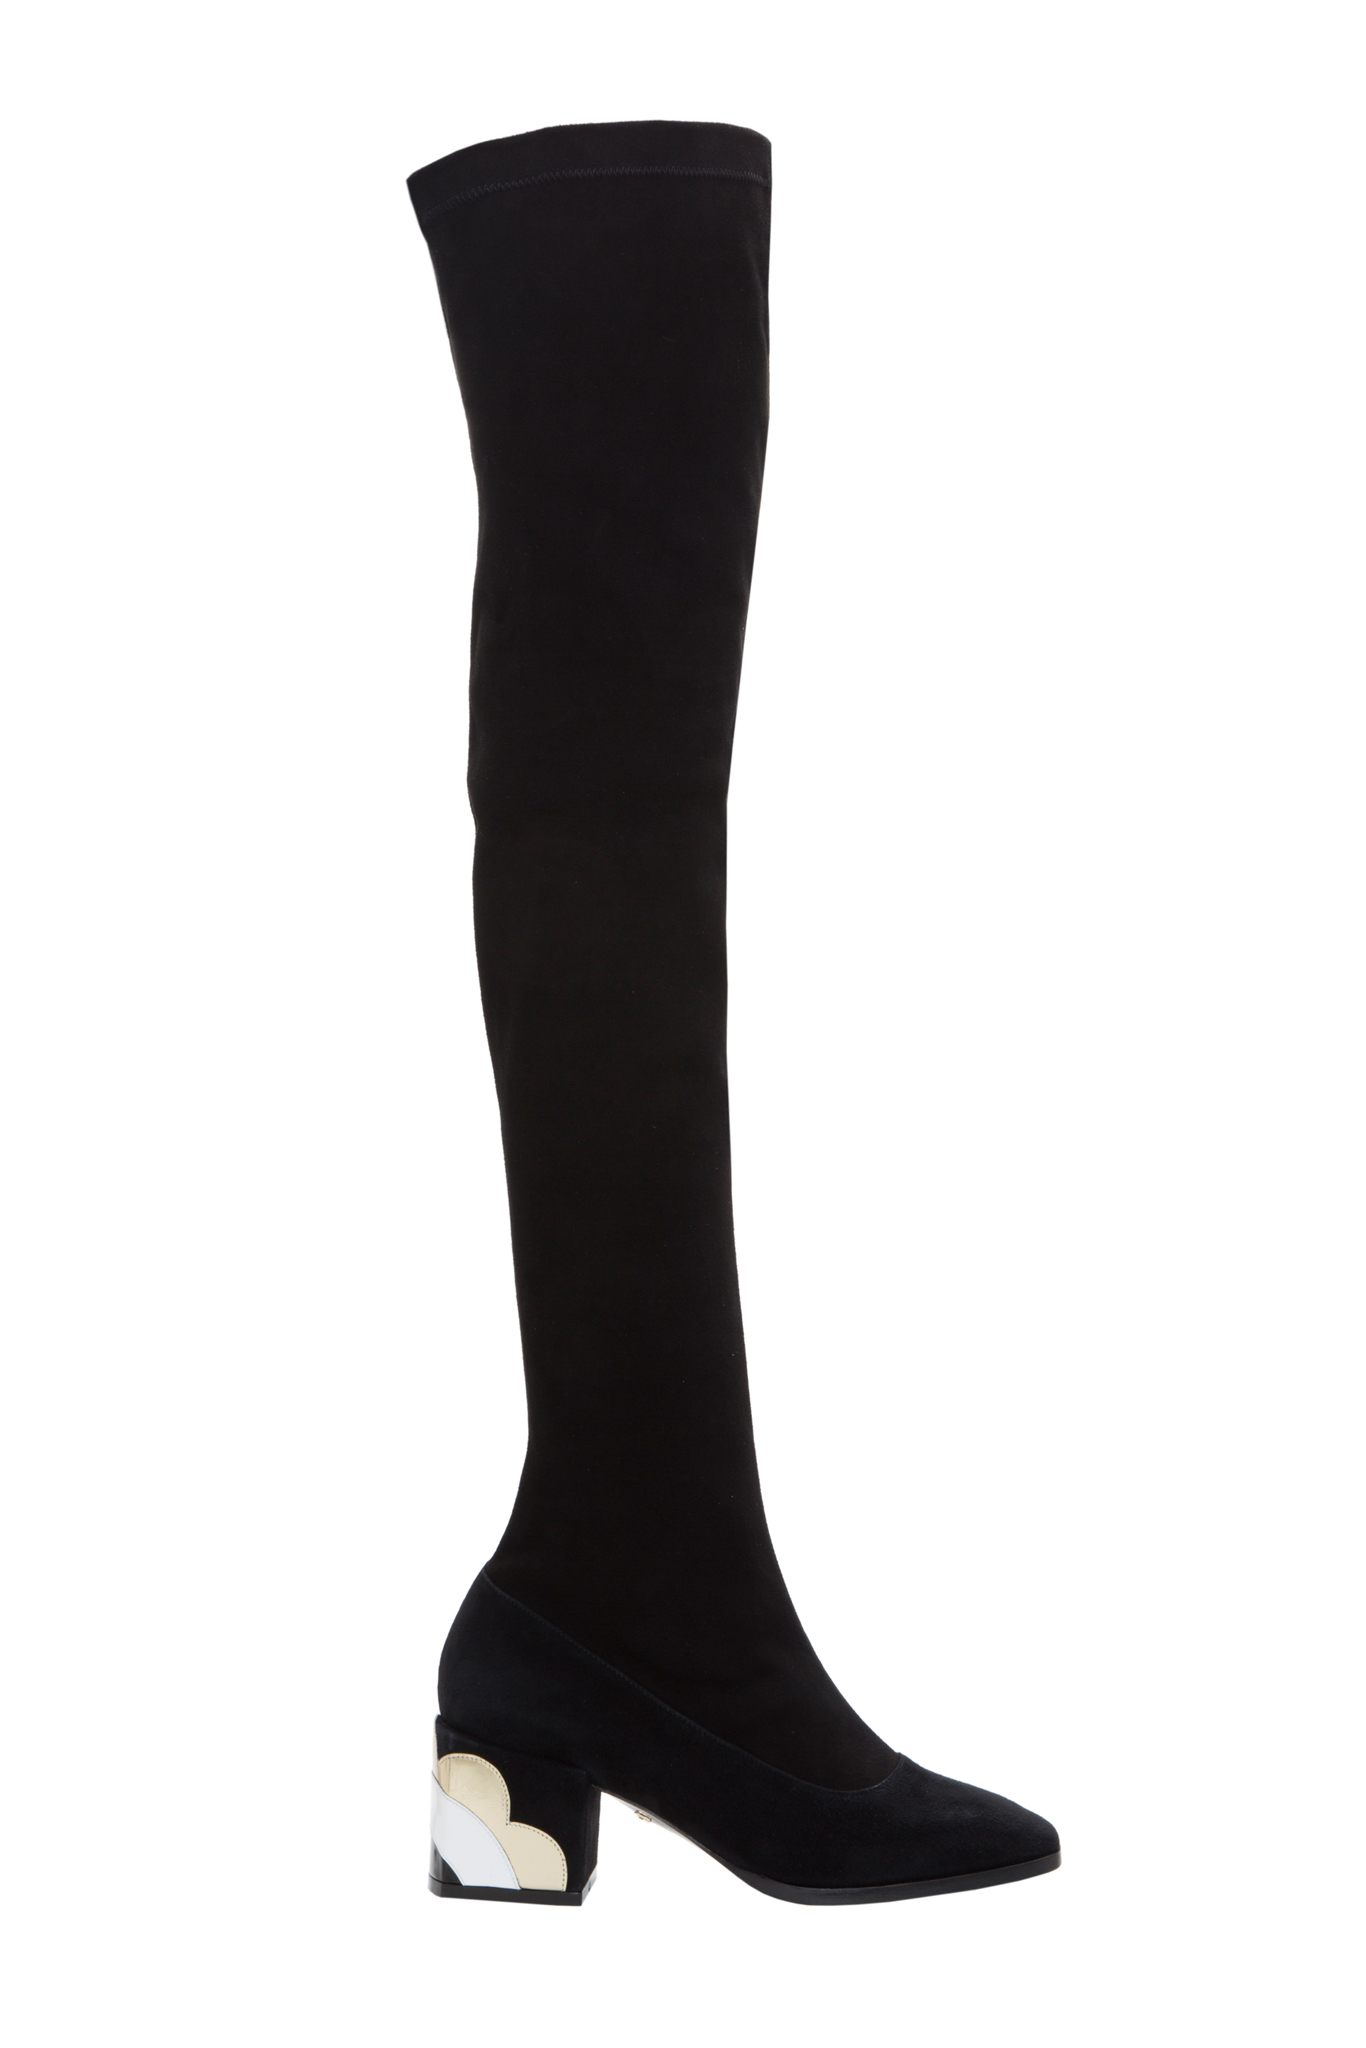 06-07-accessories-trends-fall-2015-thigh-high-boots.jpg